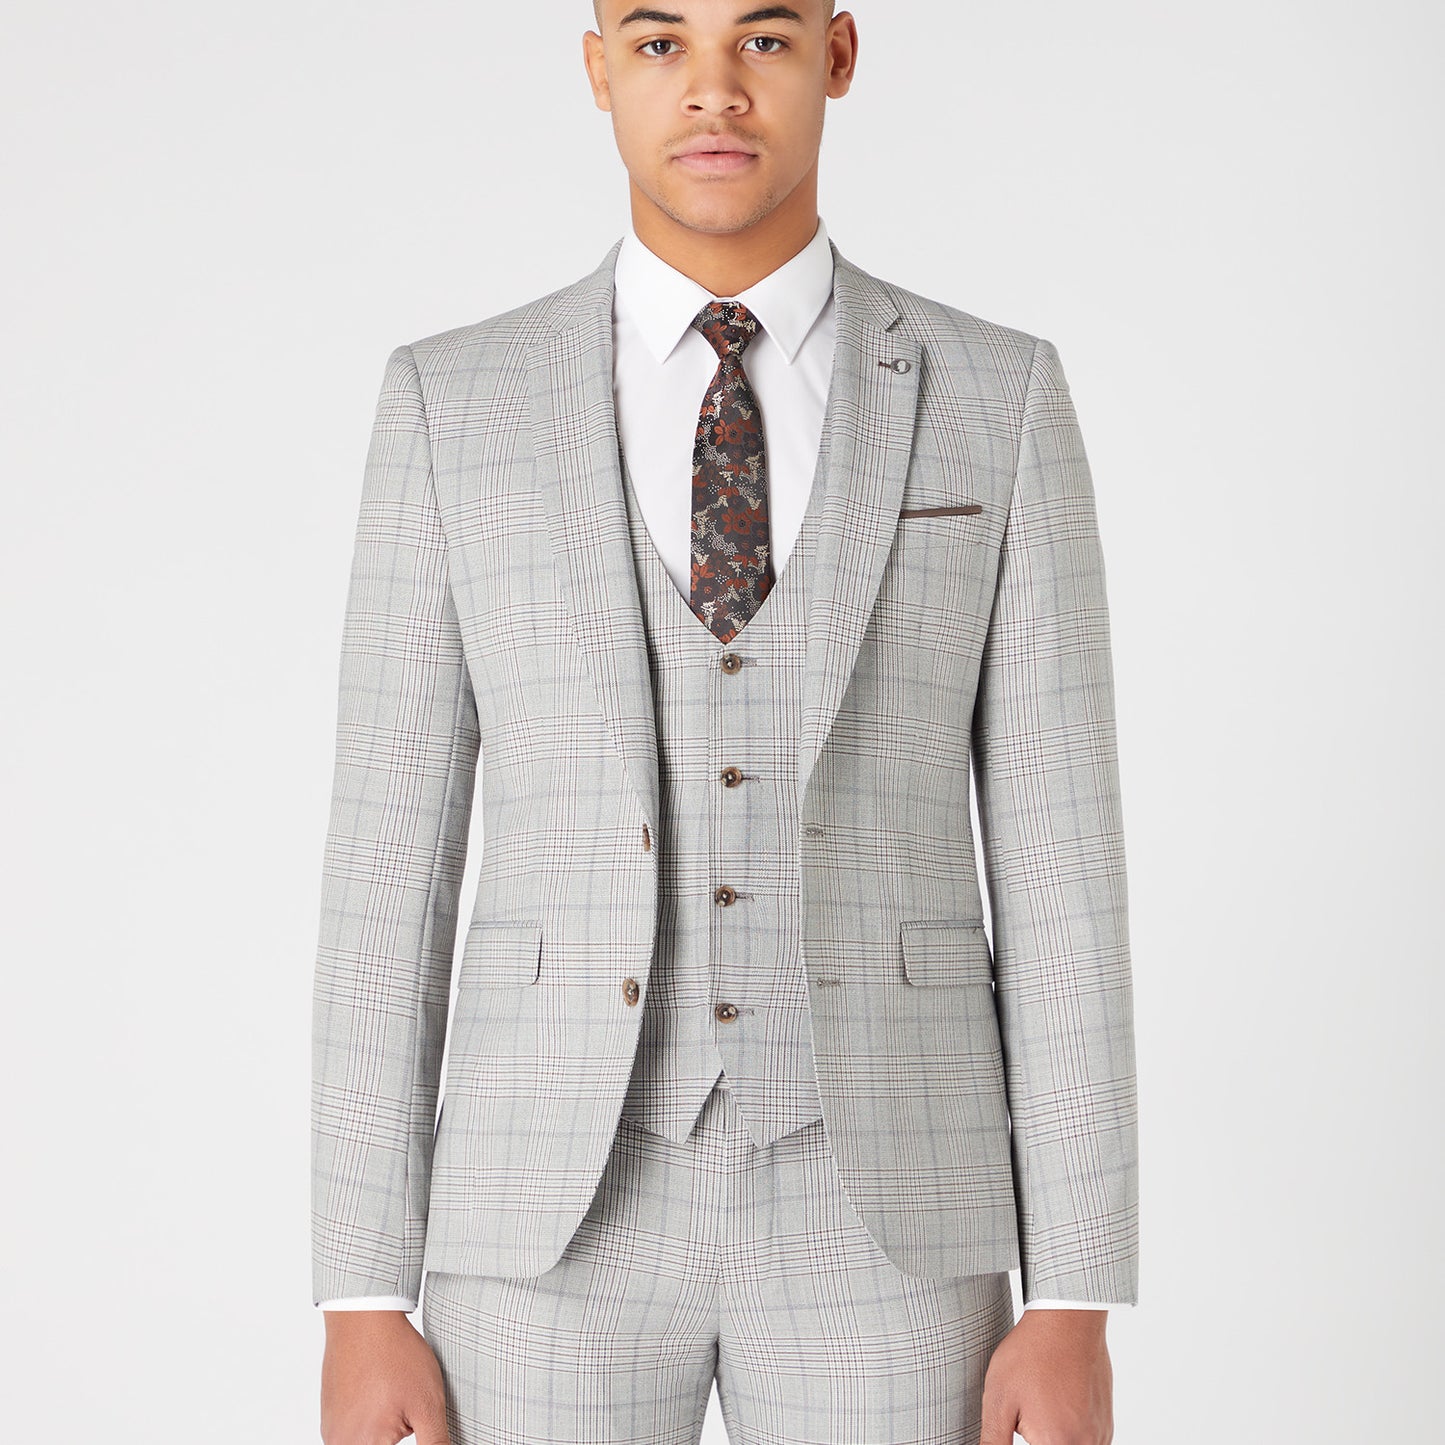 Remus Uomo 42034 04 Grey X-Slim Suit Jacket